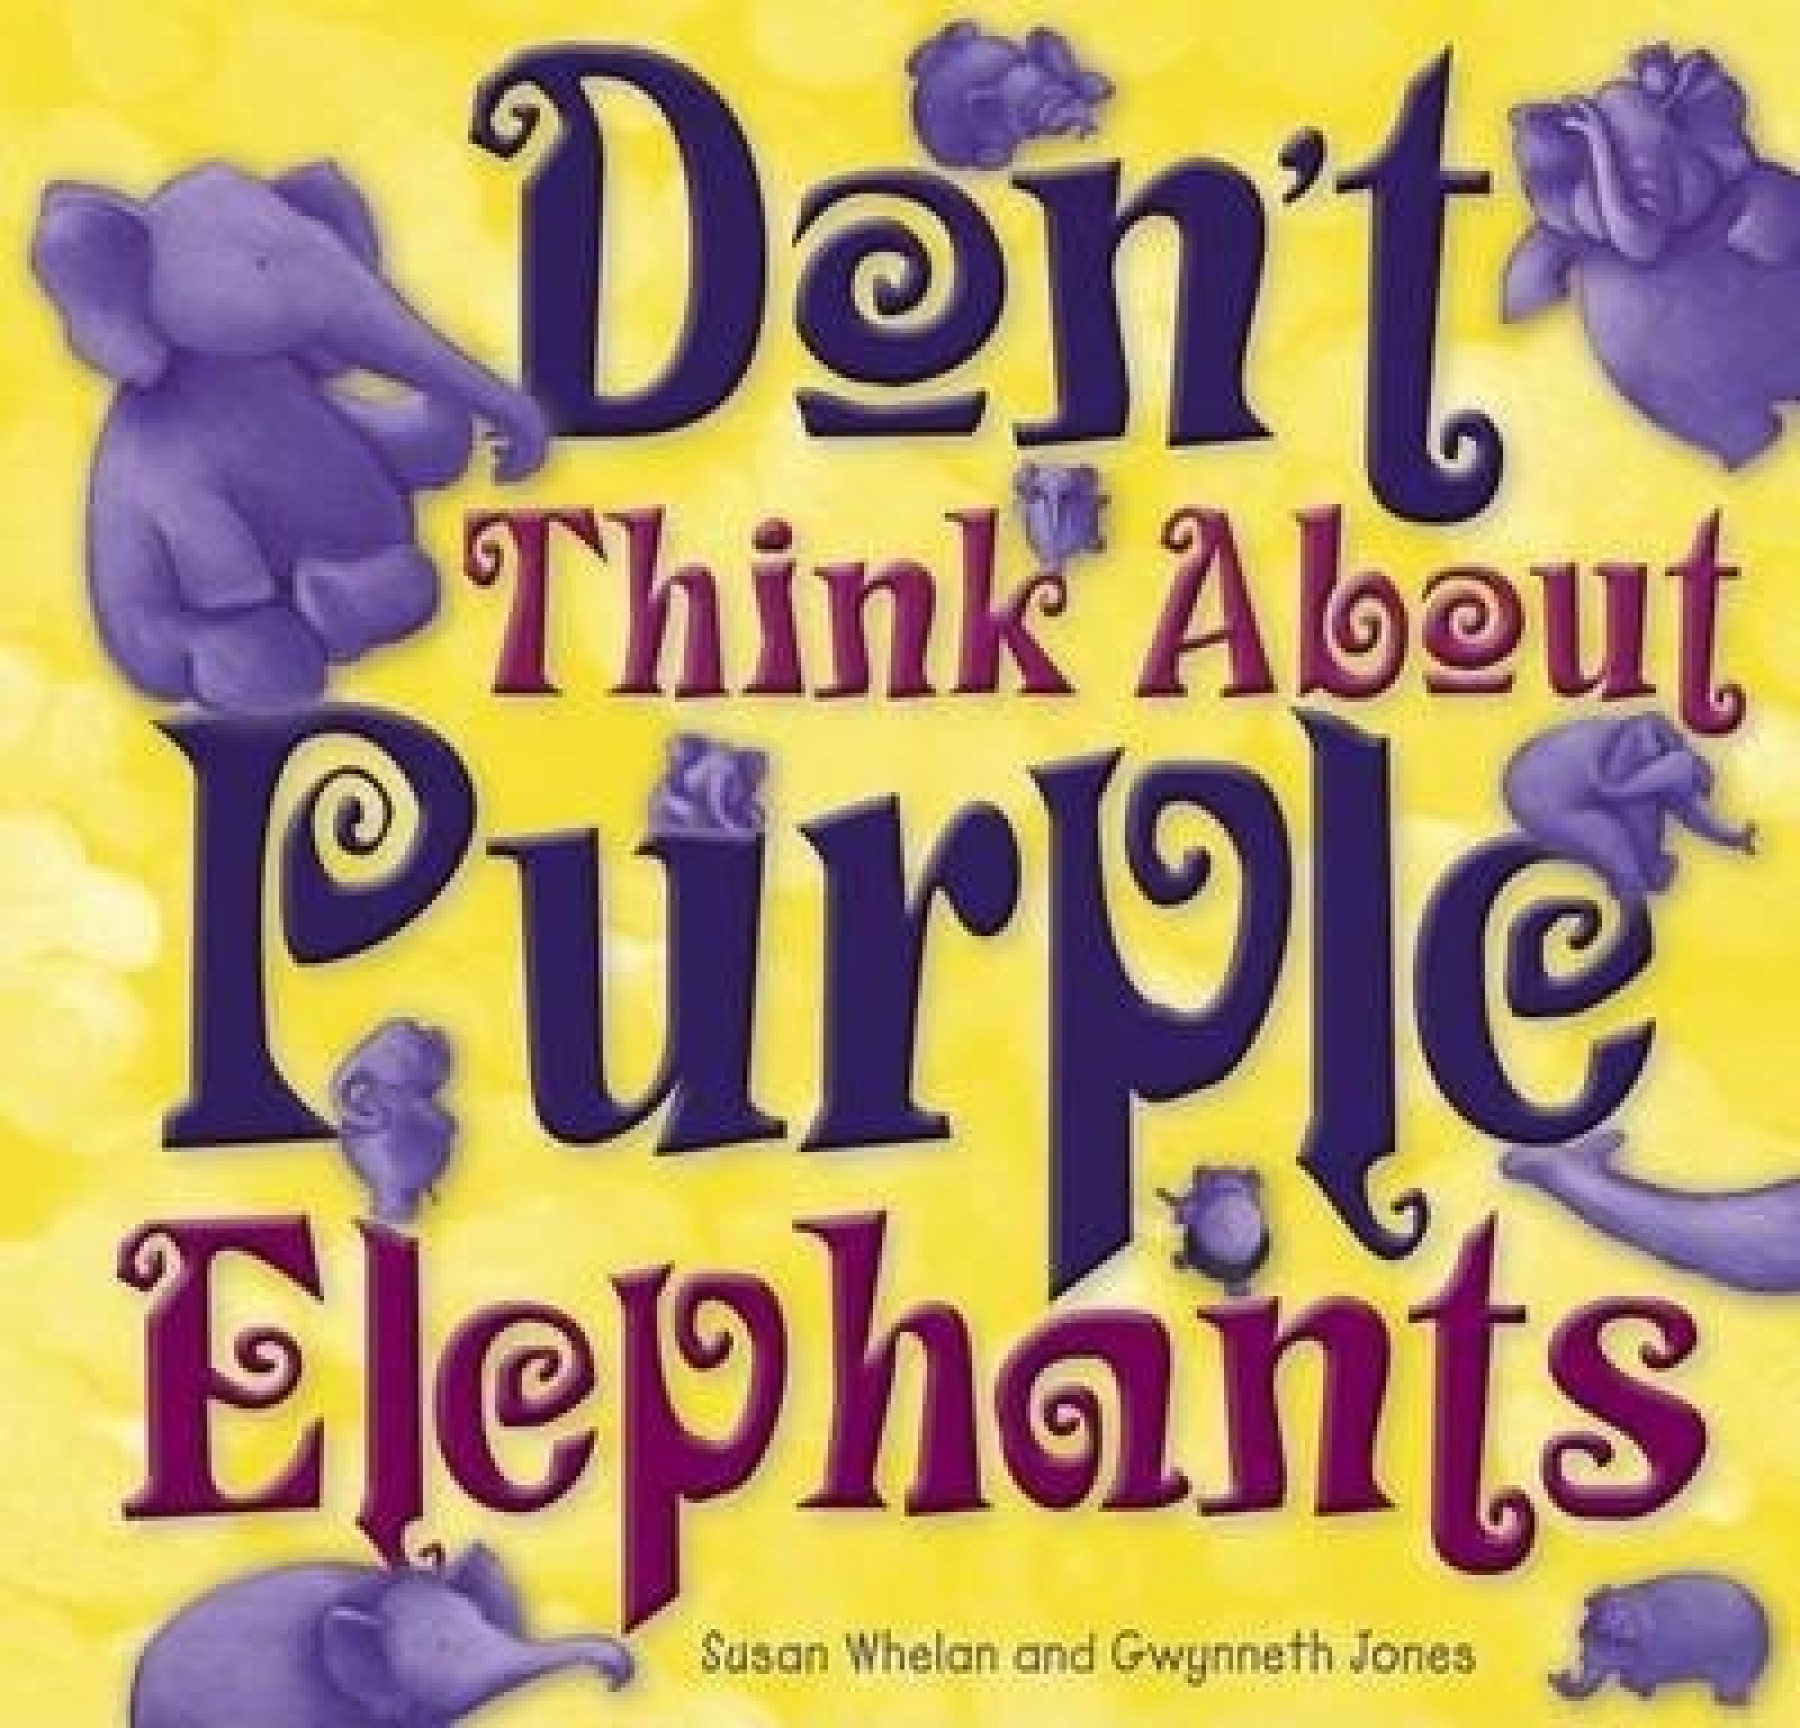 Don’t Think About Purple Elephants